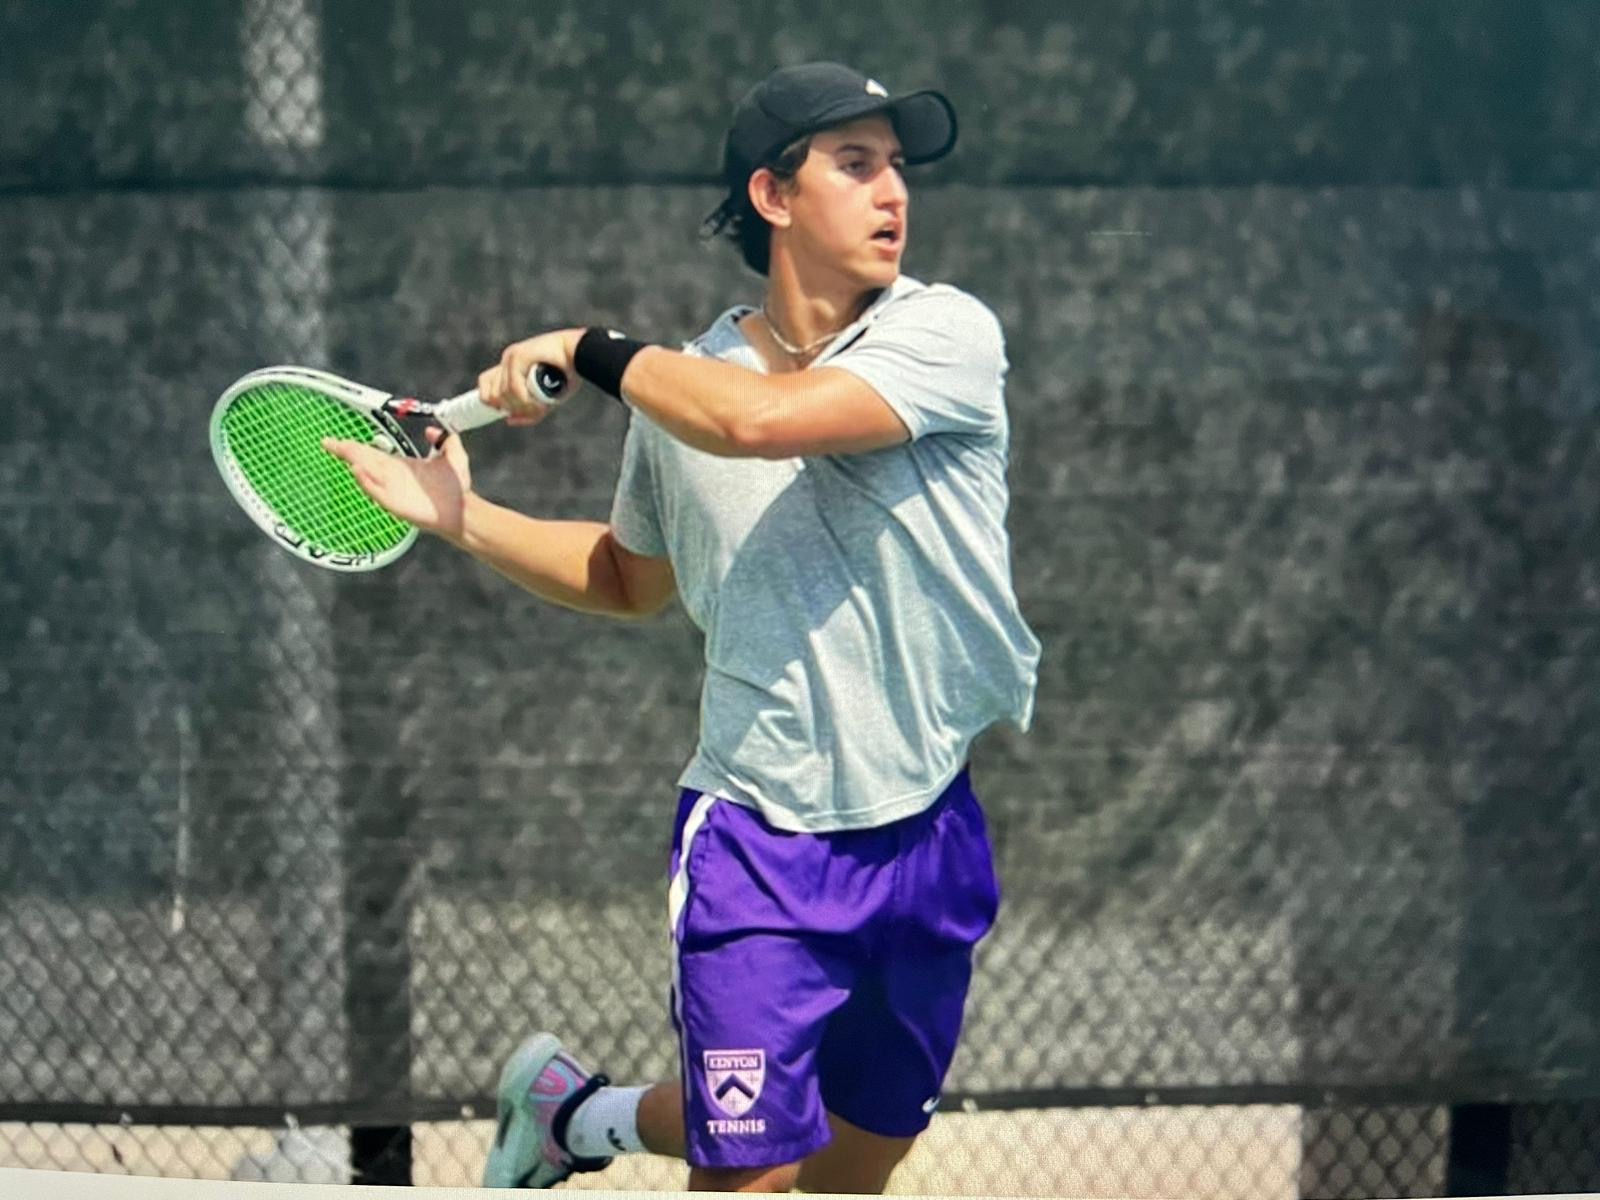 Luis A. teaches tennis lessons in Cambridge, MA